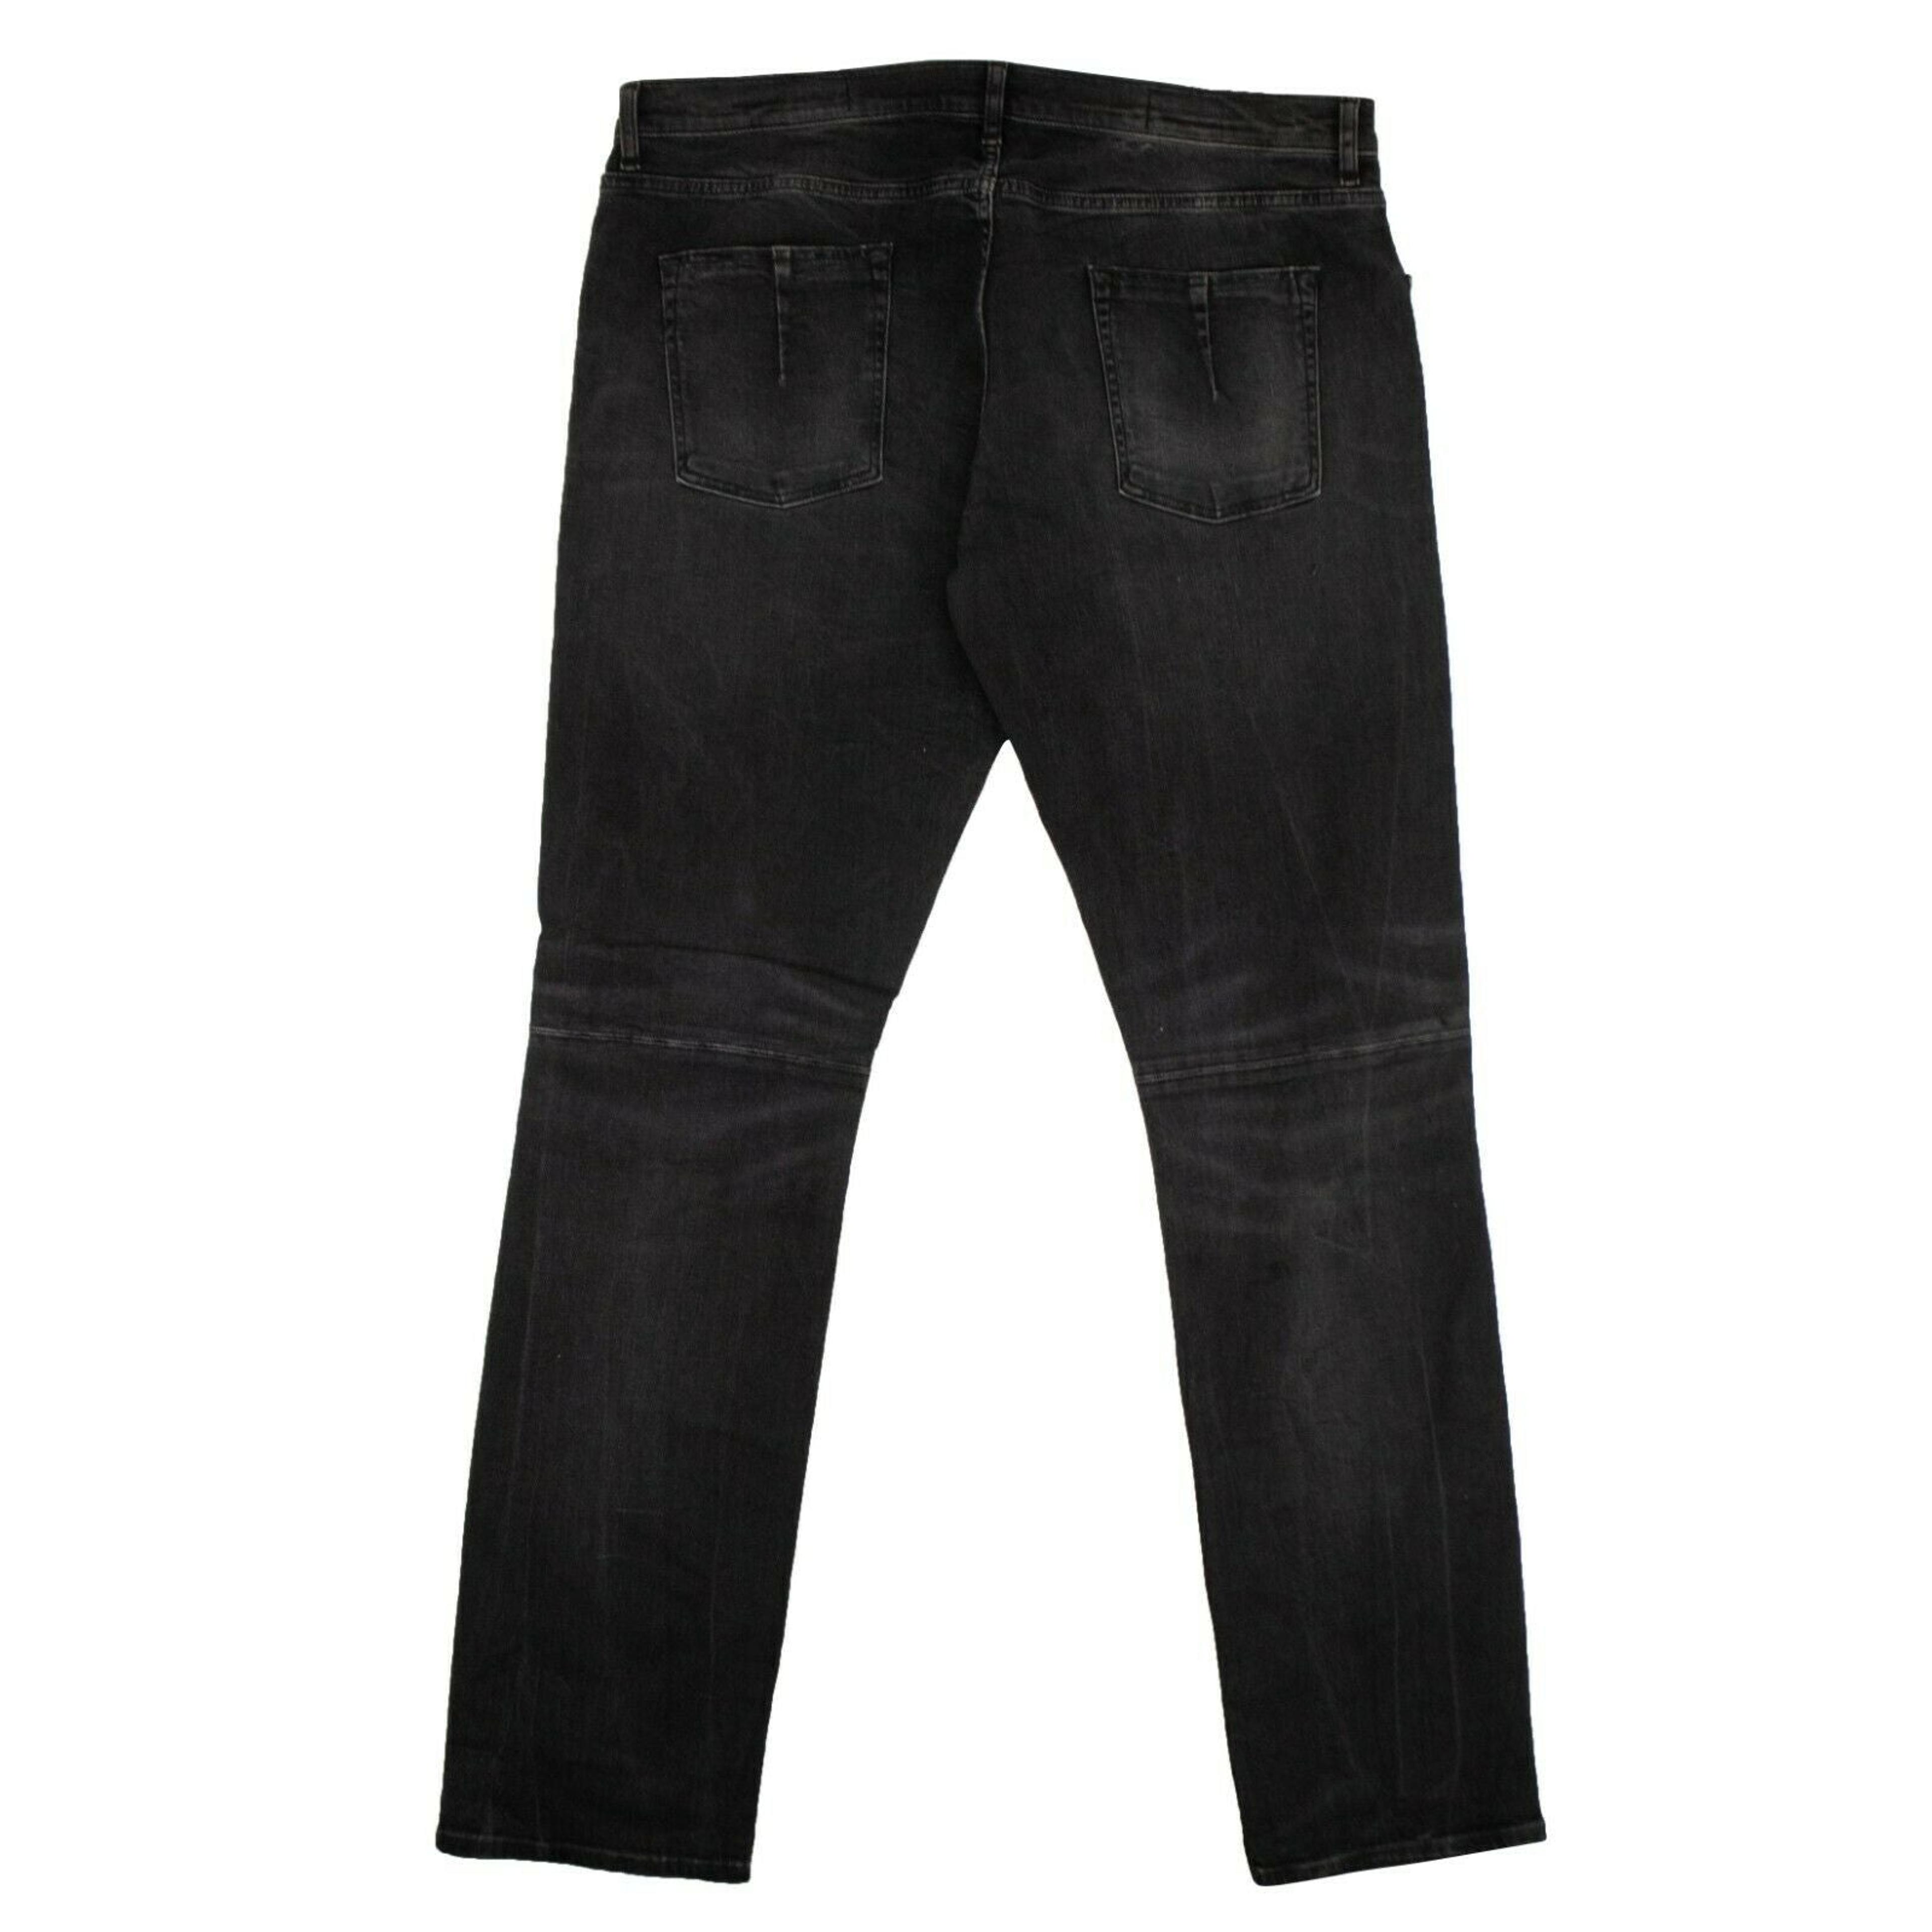 Alternate View 1 of Men's Black Distressed Slim Fit Jeans